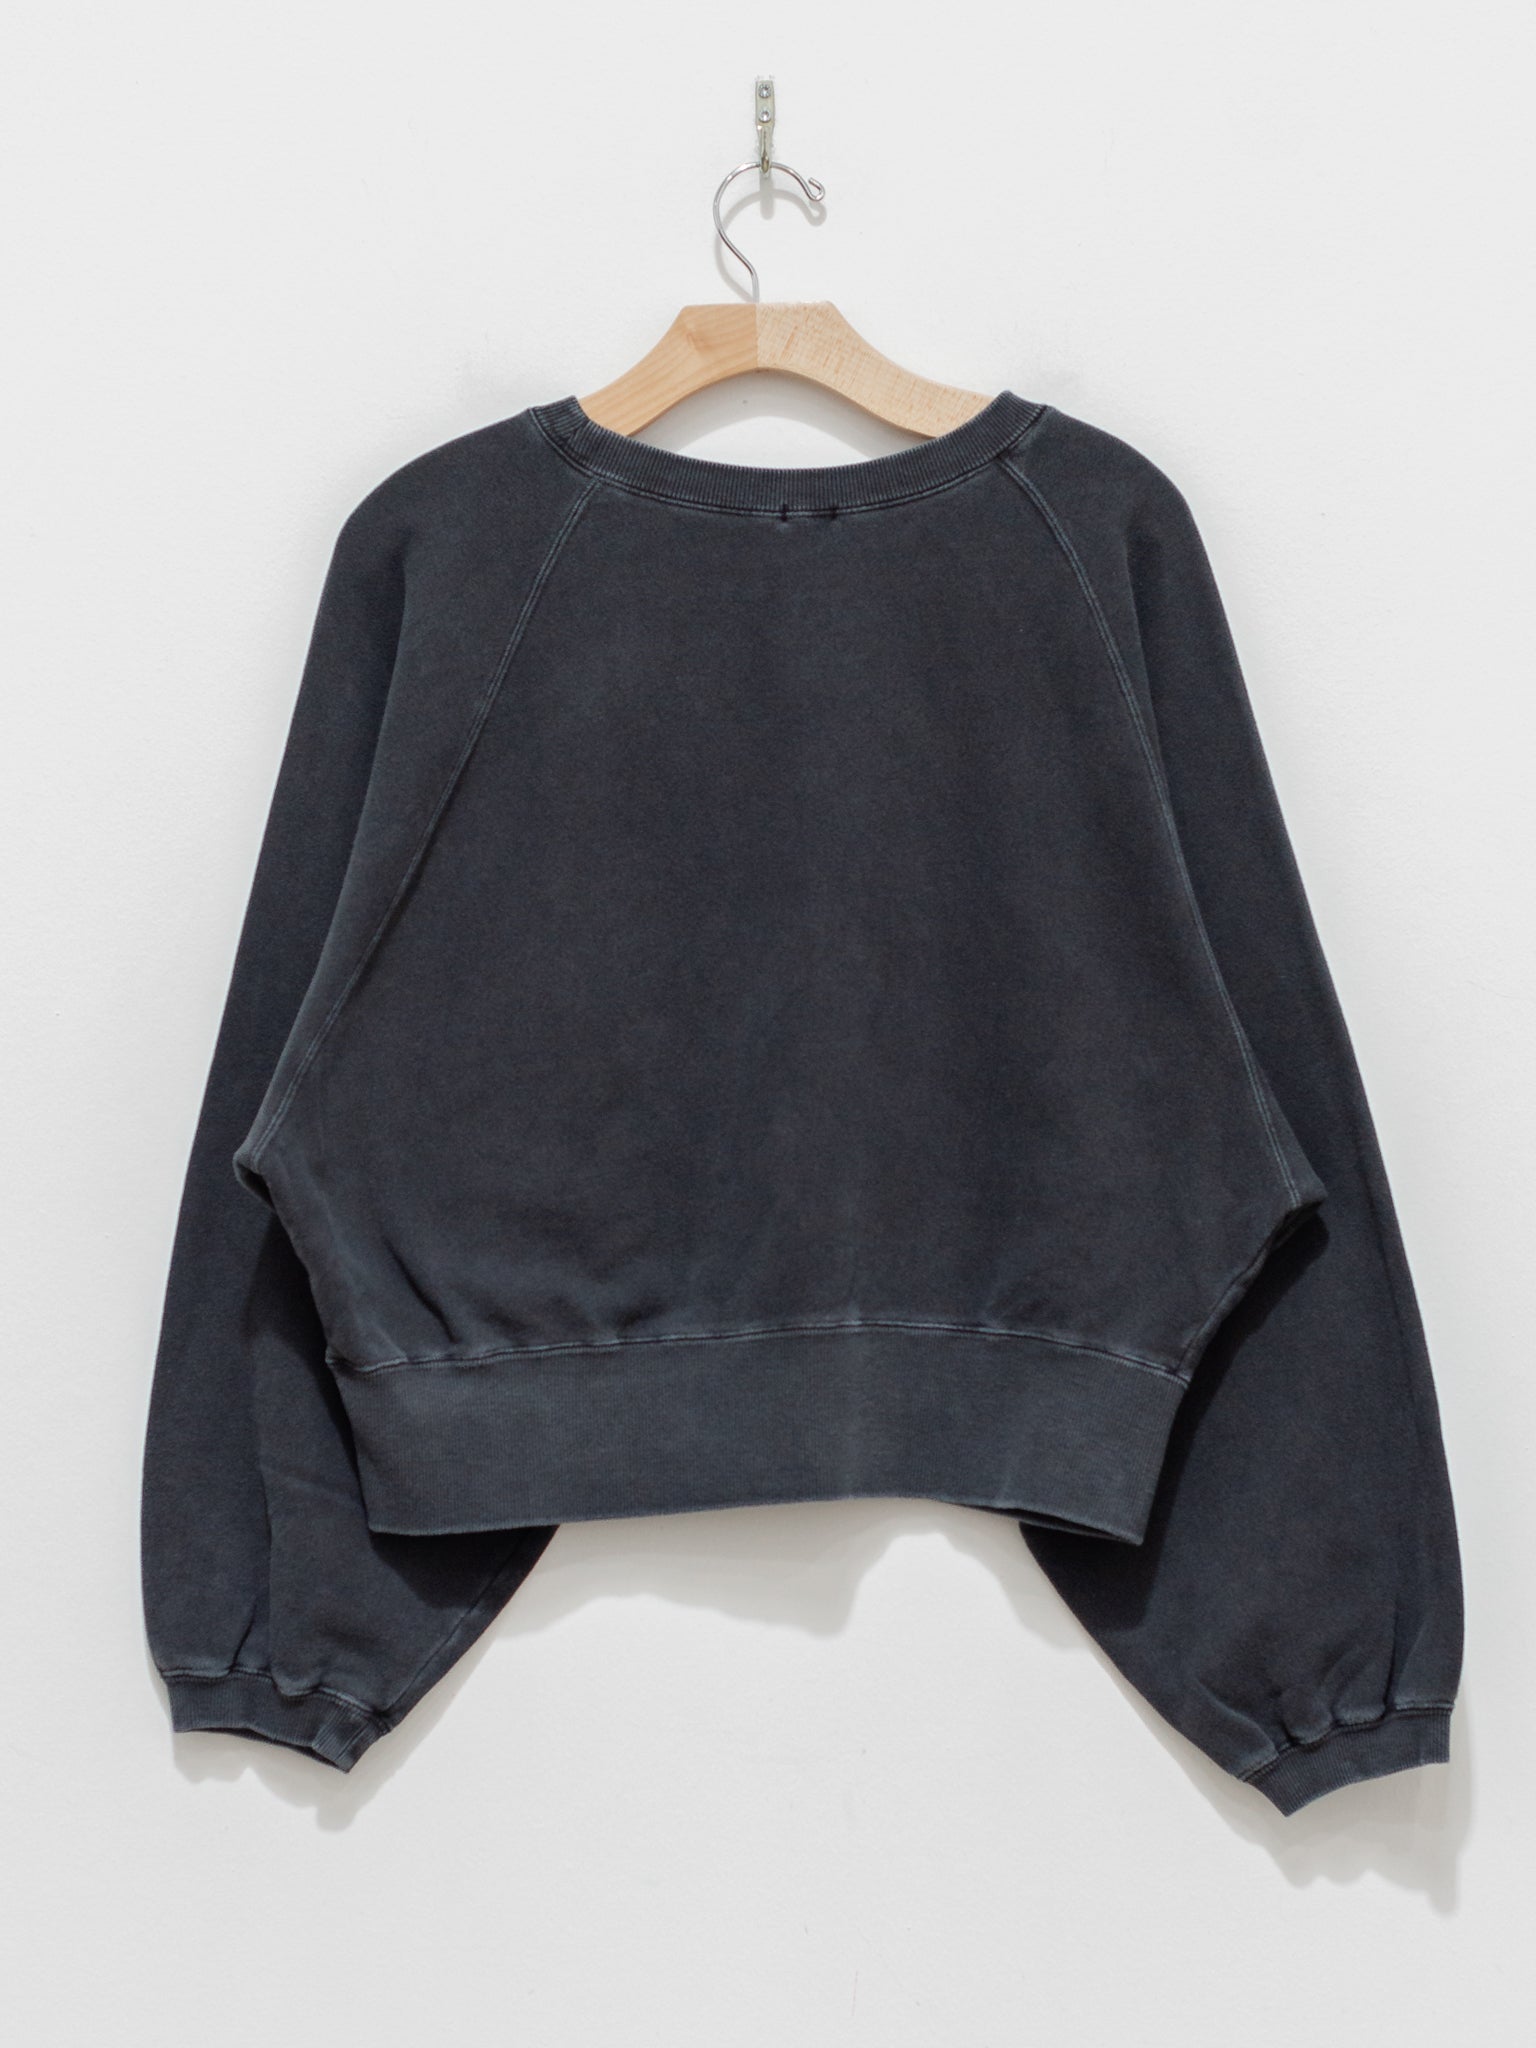 Namu Shop - ICHI Sweatshirt - Charcoal